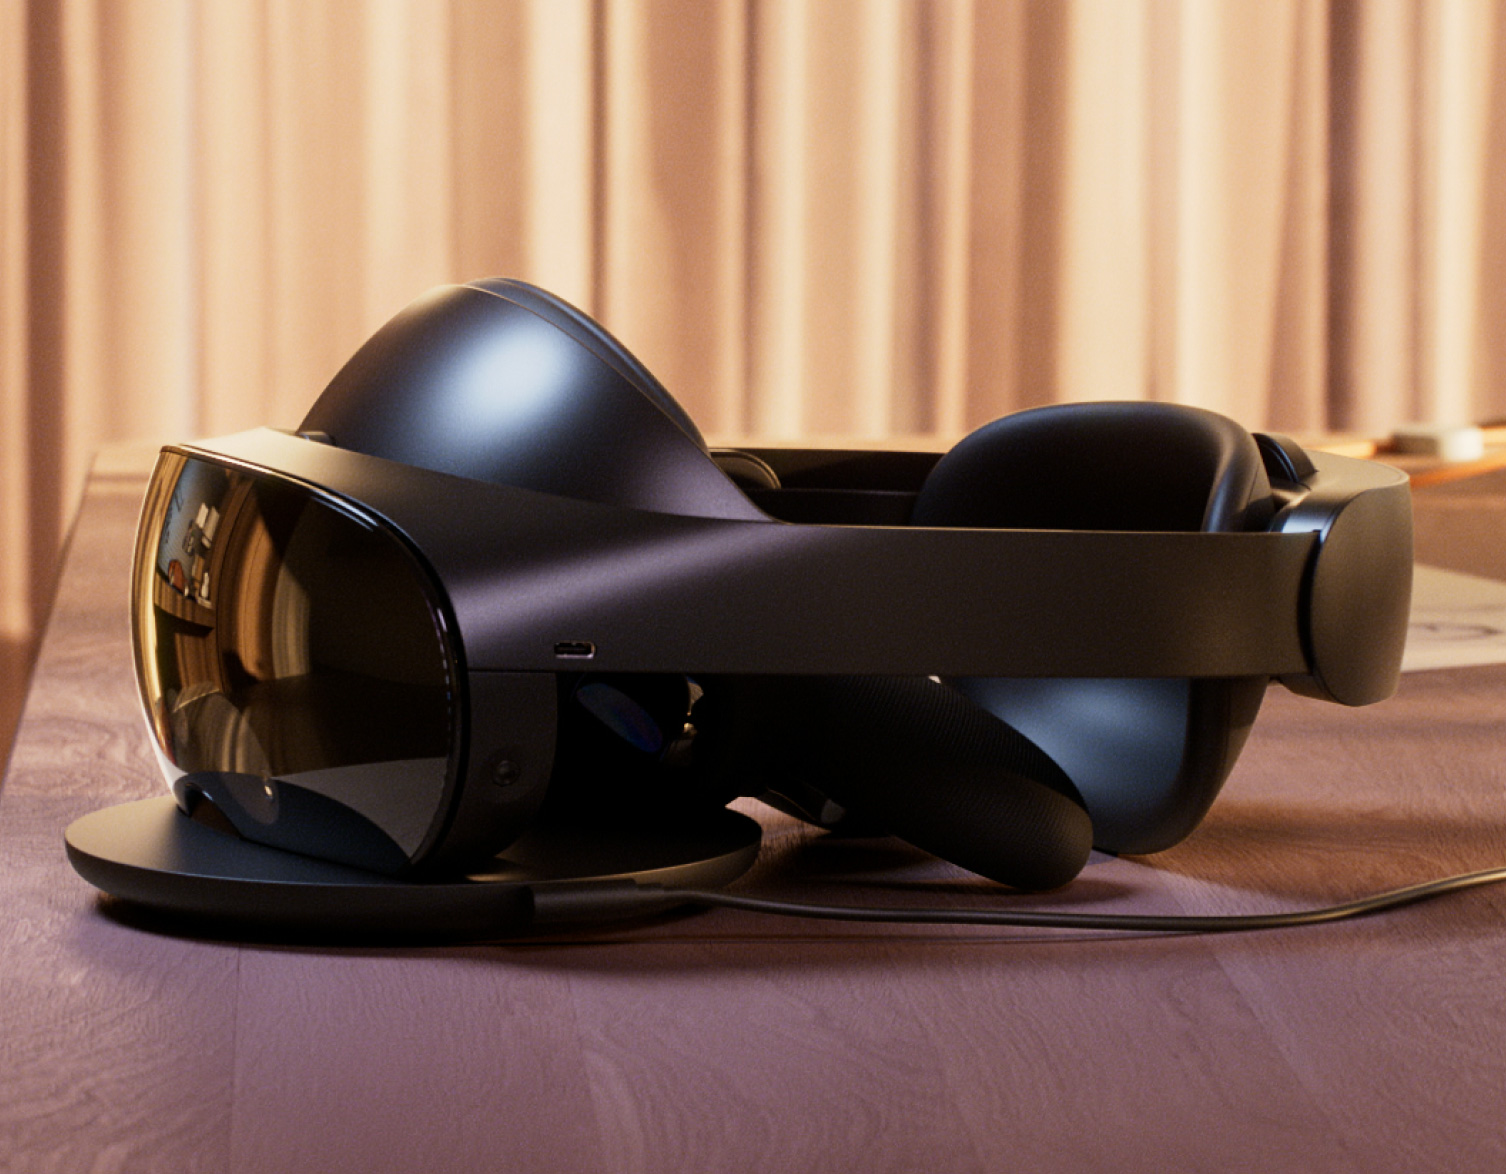 Metaの新型VRヘッドセット「Meta Quest Pro」が正式発表 ～価格は衝撃